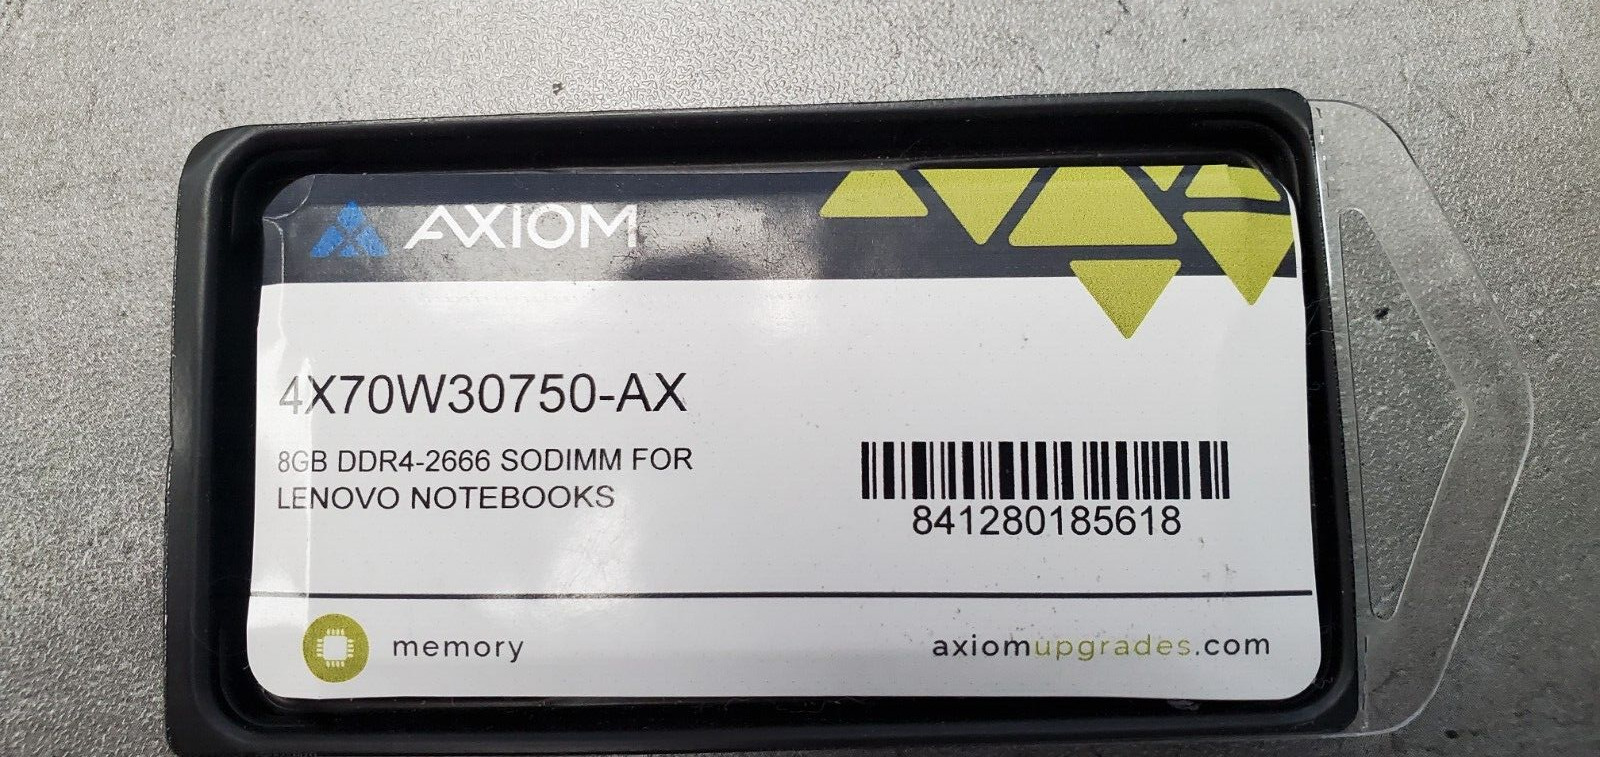 Axiom 8GB DDR4-2666 SODIMM Lenovo Notebooks (4X70W30750-AX) (BRAND NEW/SEALED)